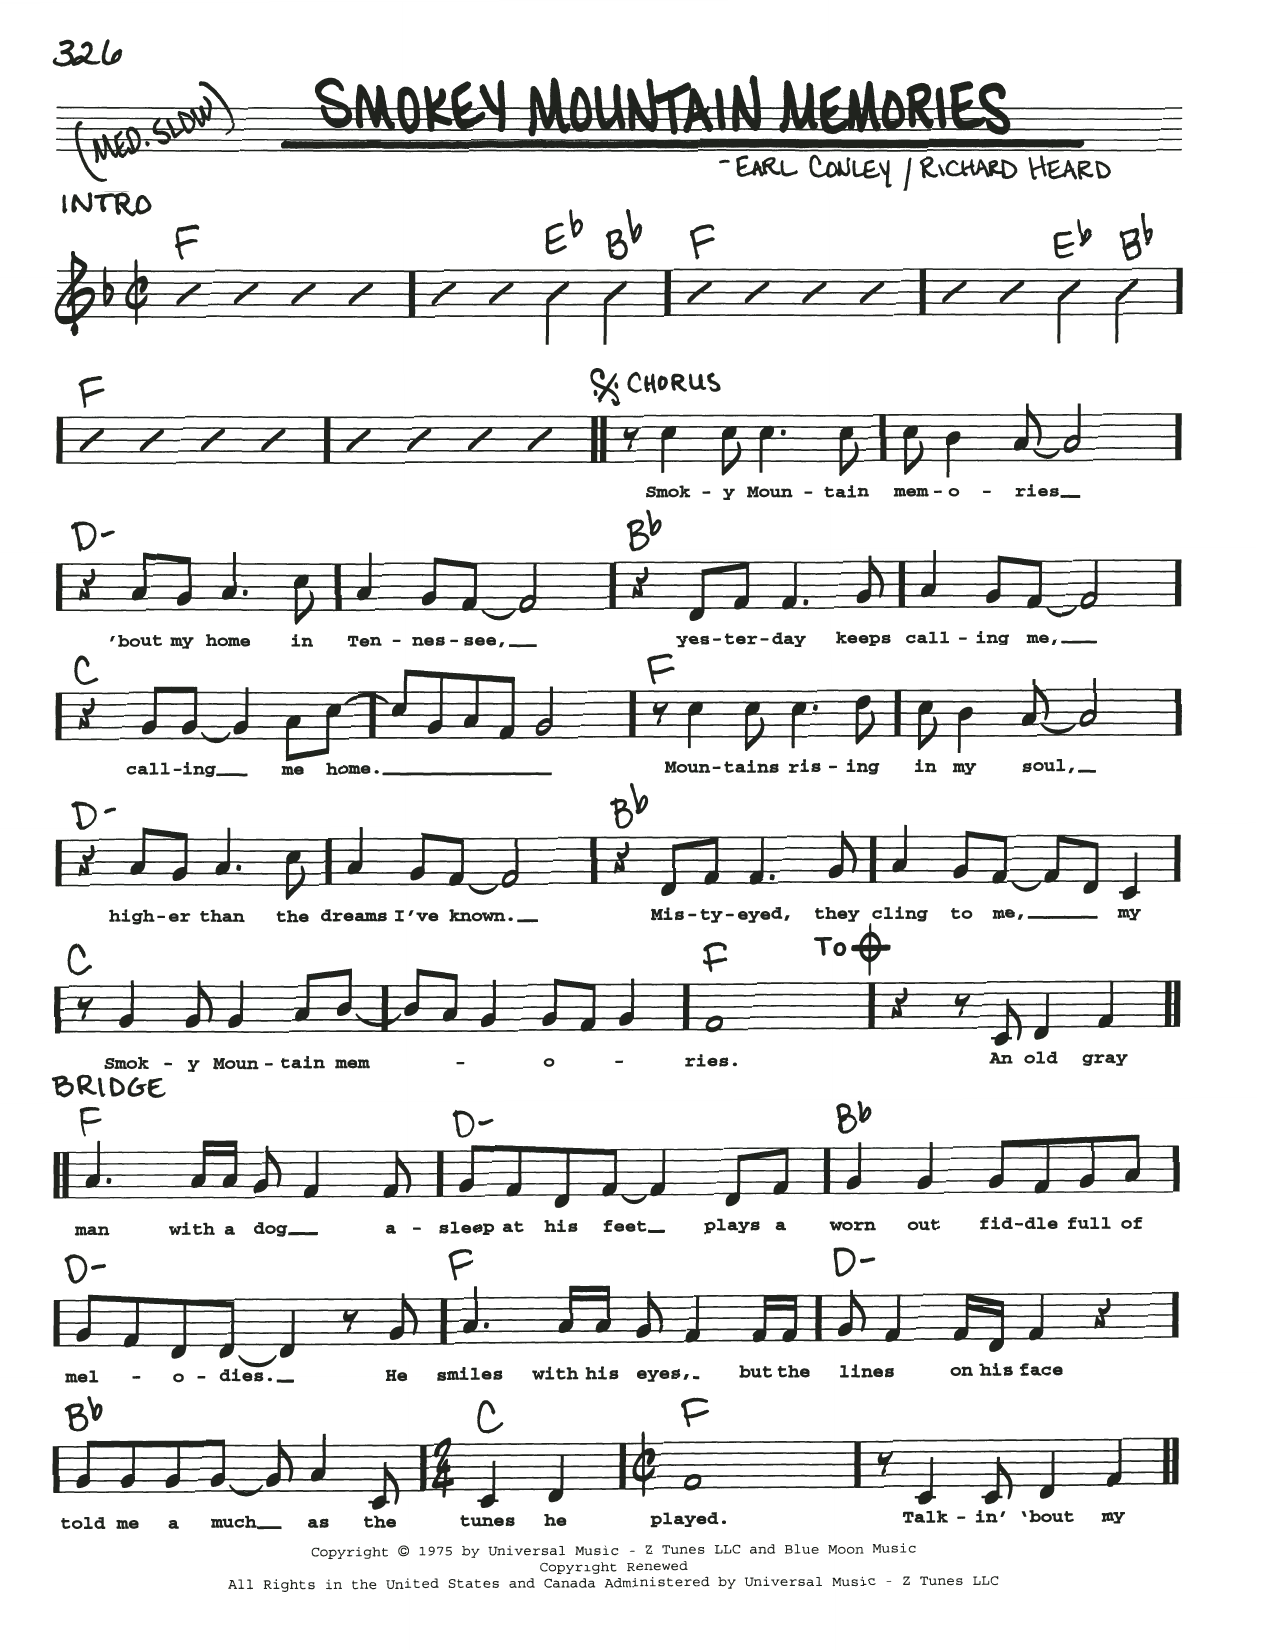 Earl Conley Smokey Mountain Memories Sheet Music Notes & Chords for Real Book – Melody, Lyrics & Chords - Download or Print PDF